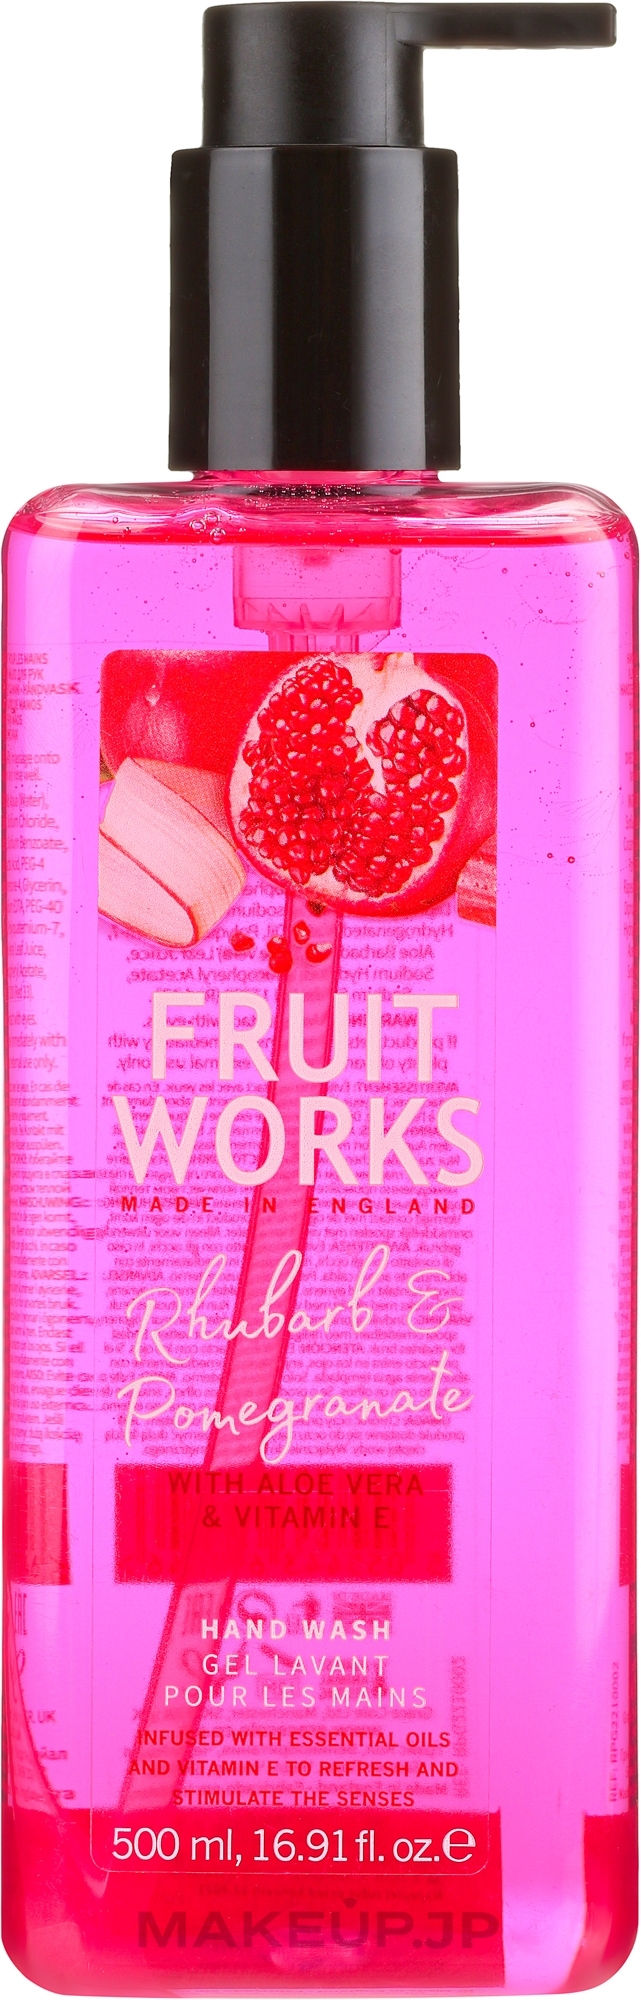 Hand Soap "Rhubarb & Pomegranate" - Grace Cole Fruit Works Hand Wash Rhubarb & Pomegranate — photo 500 ml